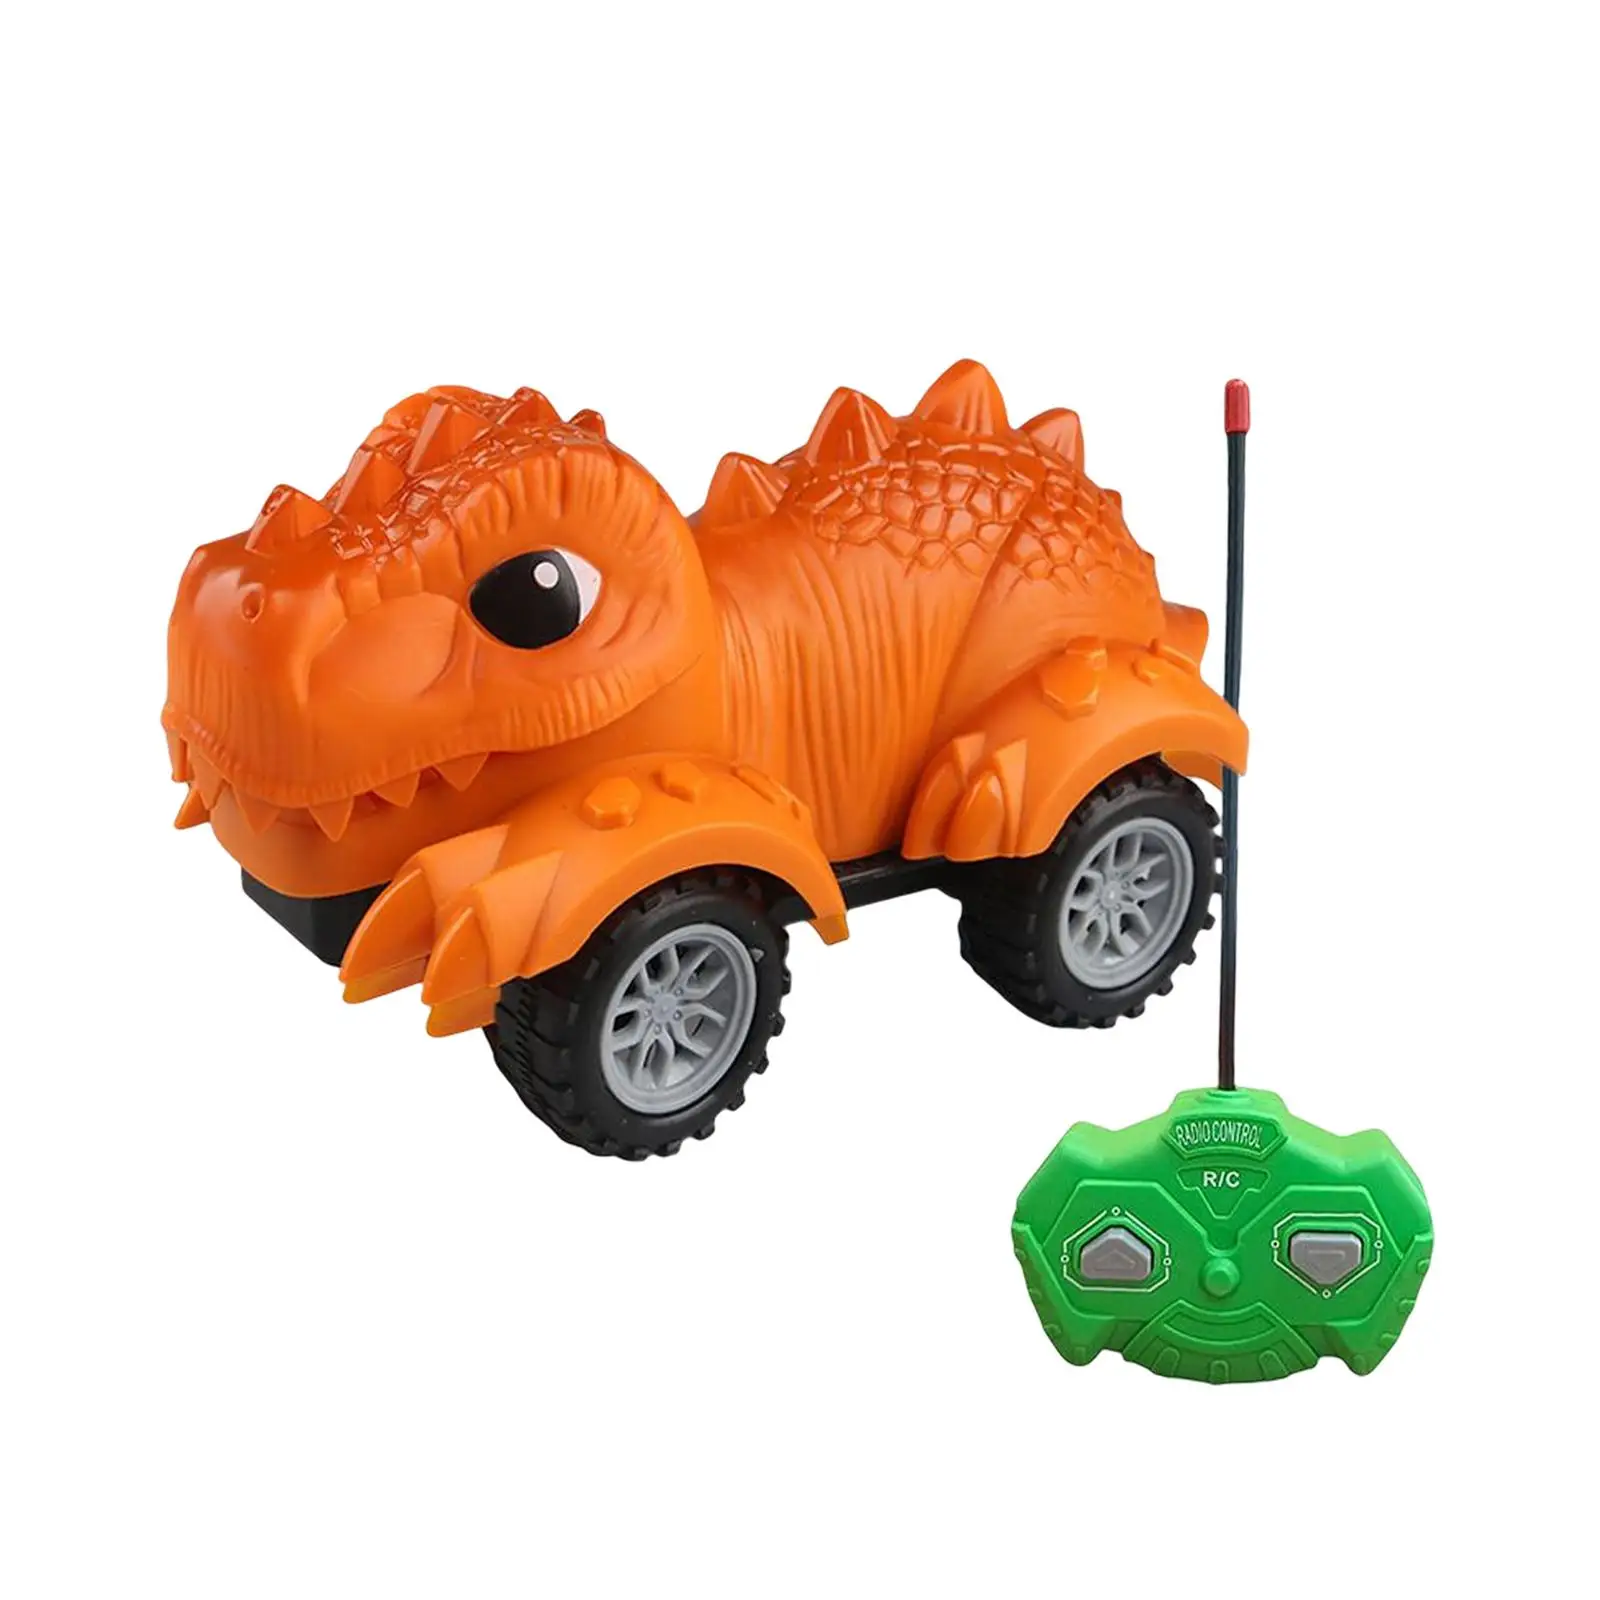 Creative Dinosaur Car Toys Monster Trucks RC Race car Car for Party Favors Toddler Toys Christmas Gifts Boys Children